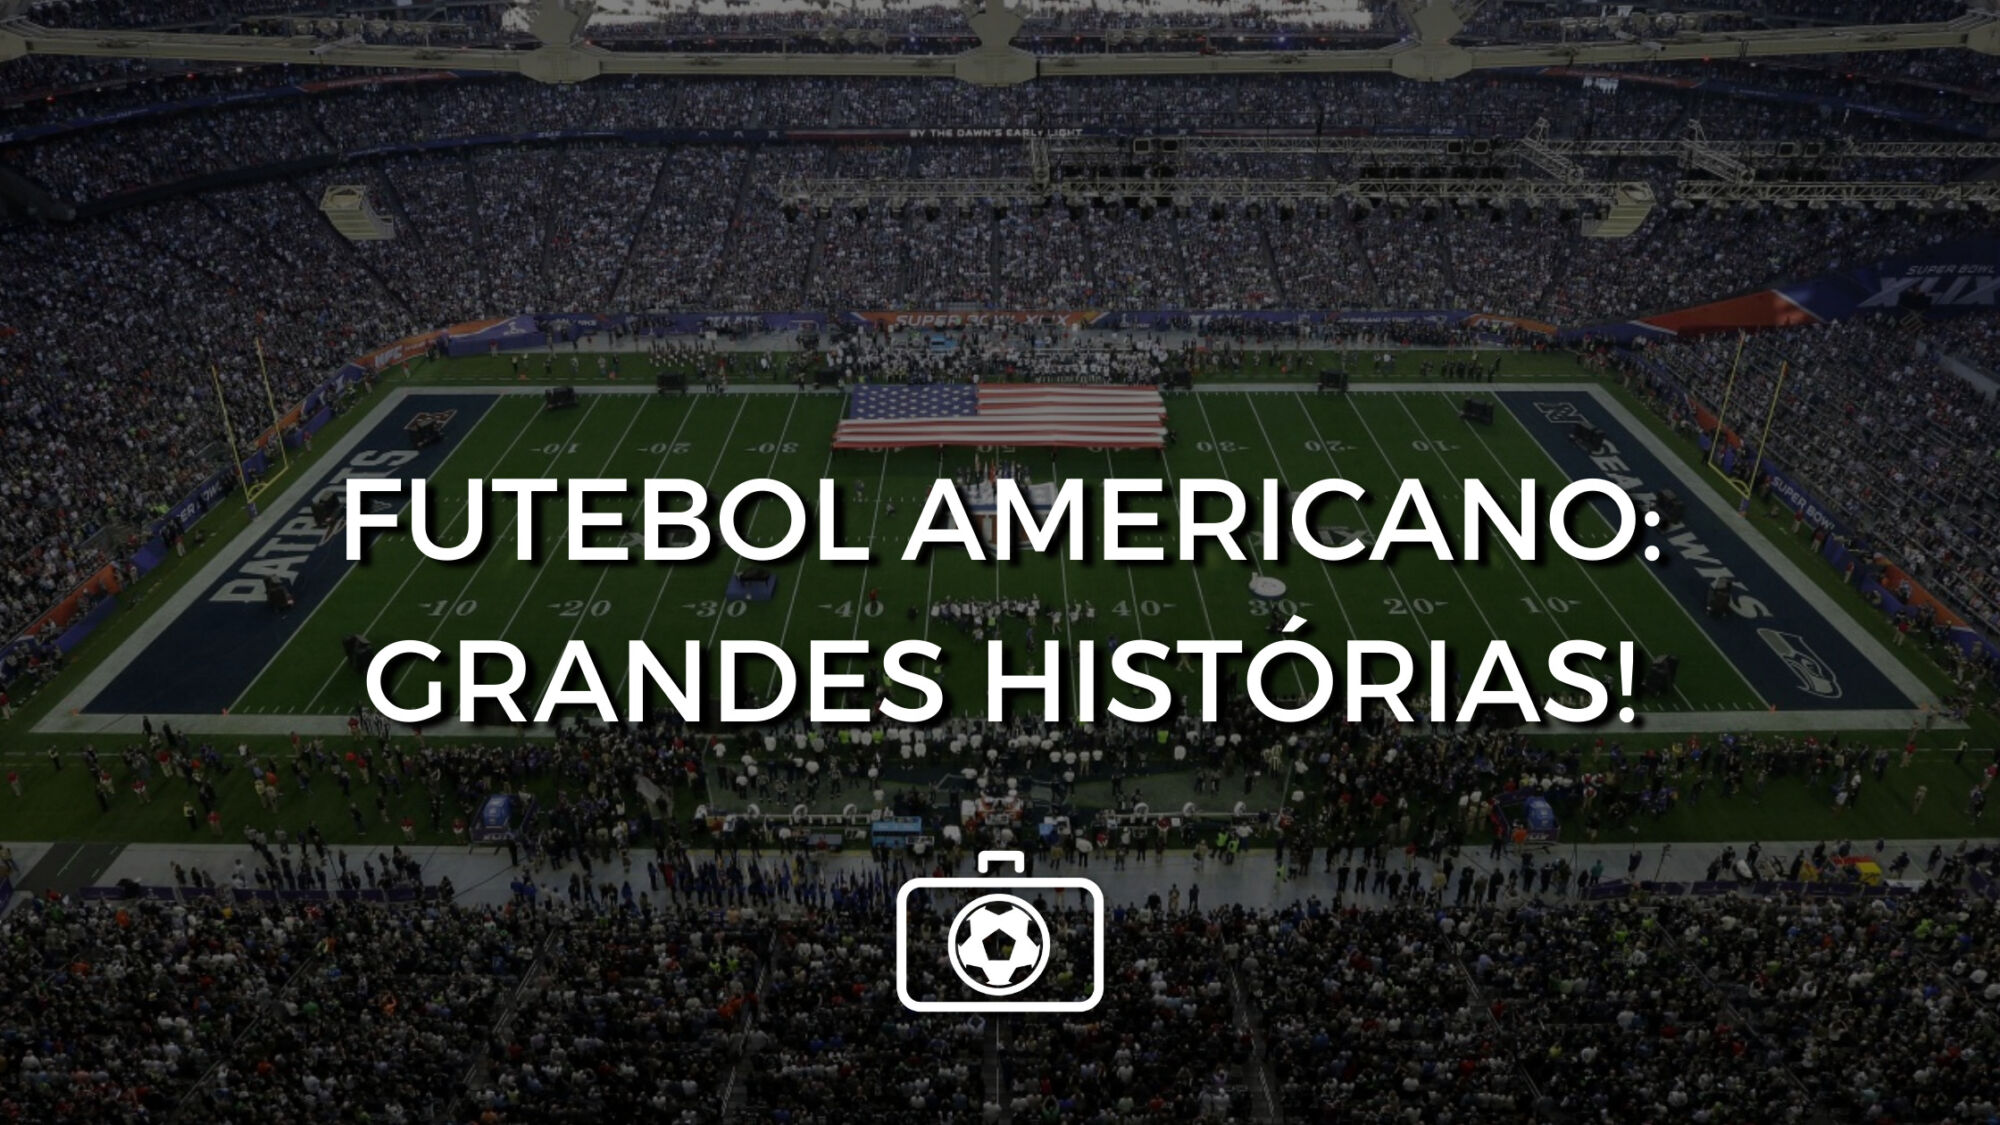 Futebol Americano A História do Futebol Americano